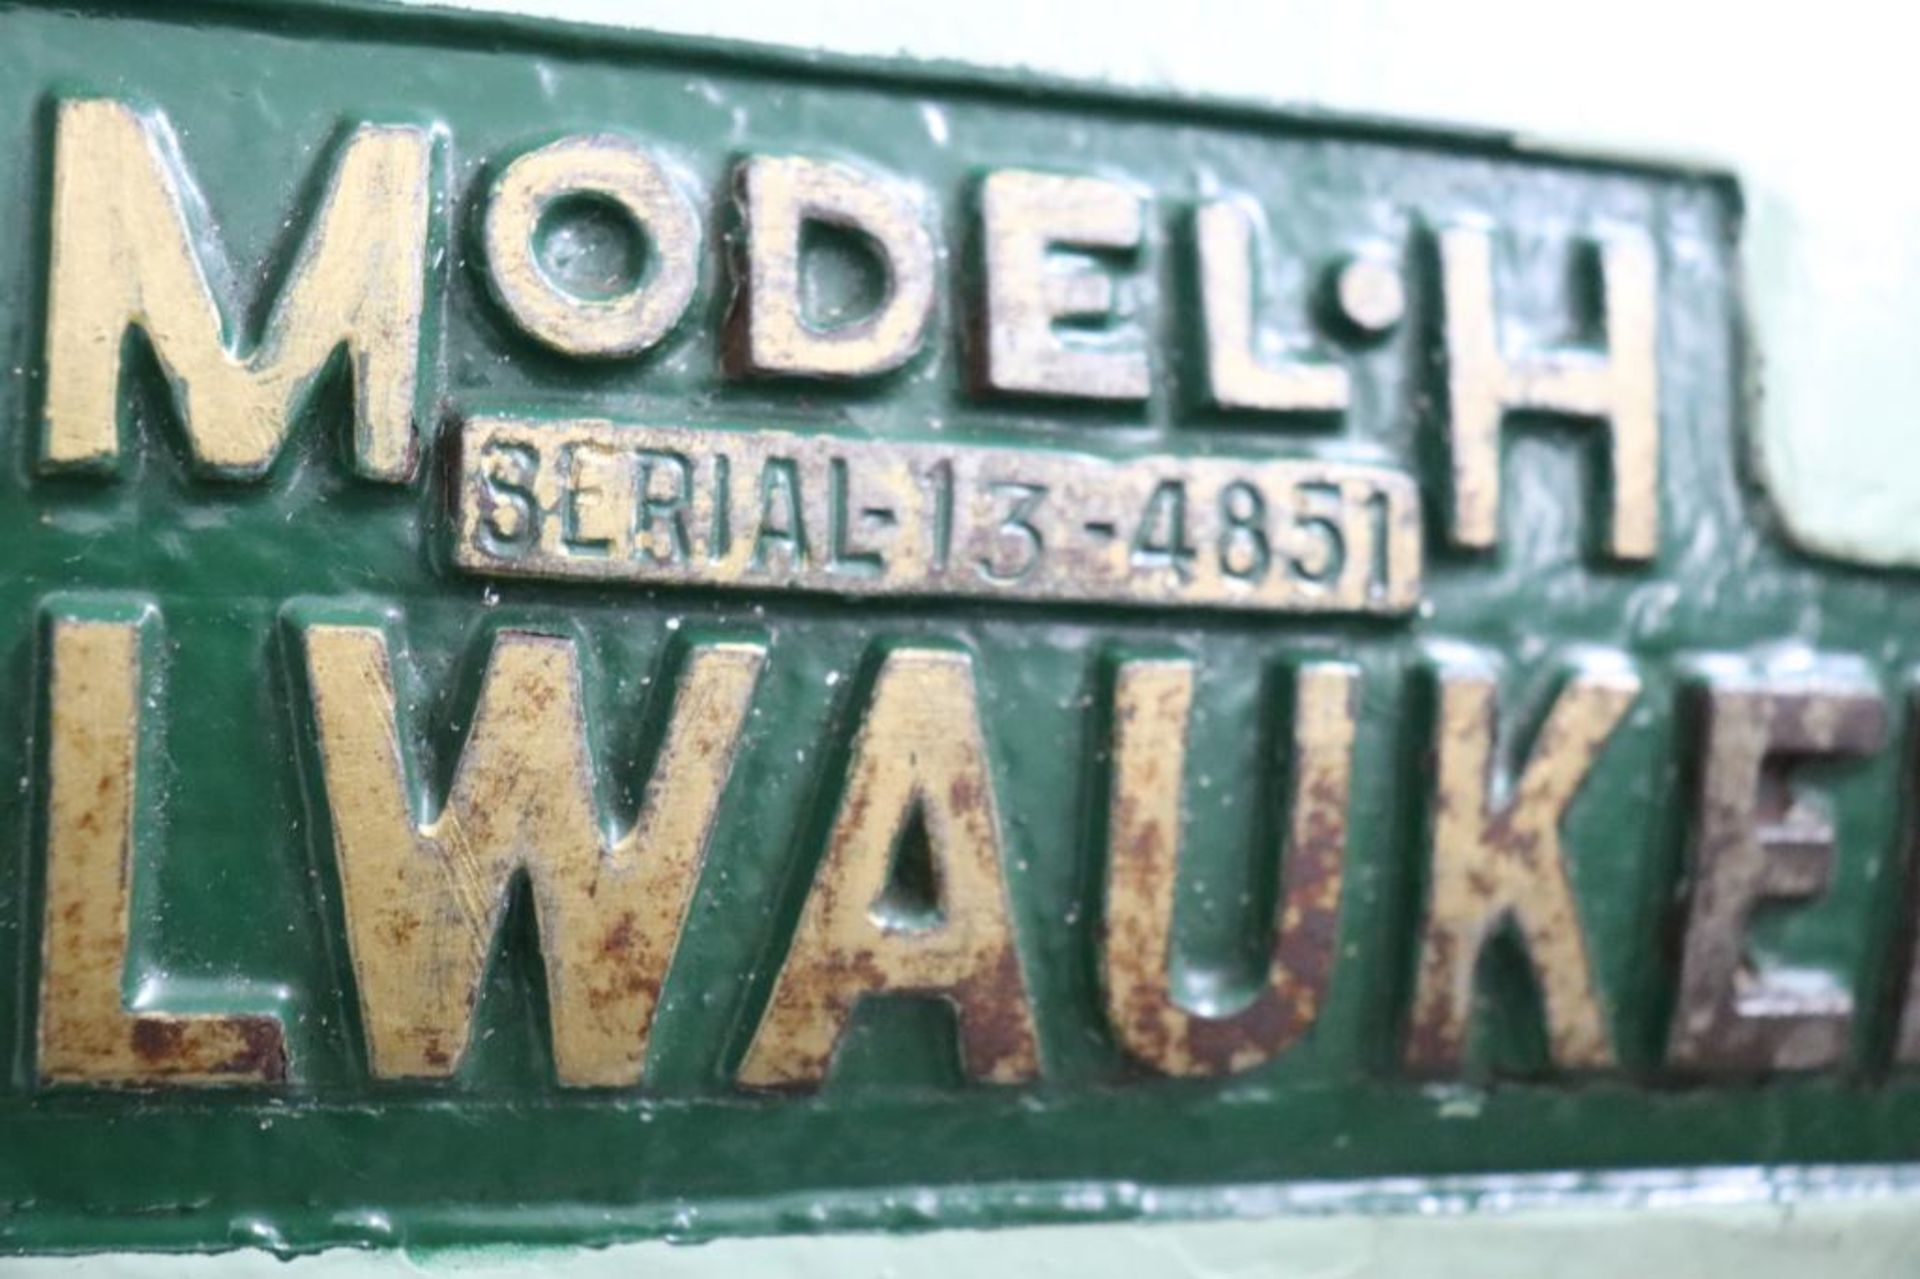 Milwaukee Model H Vintage Vertical milling machine - Image 9 of 9